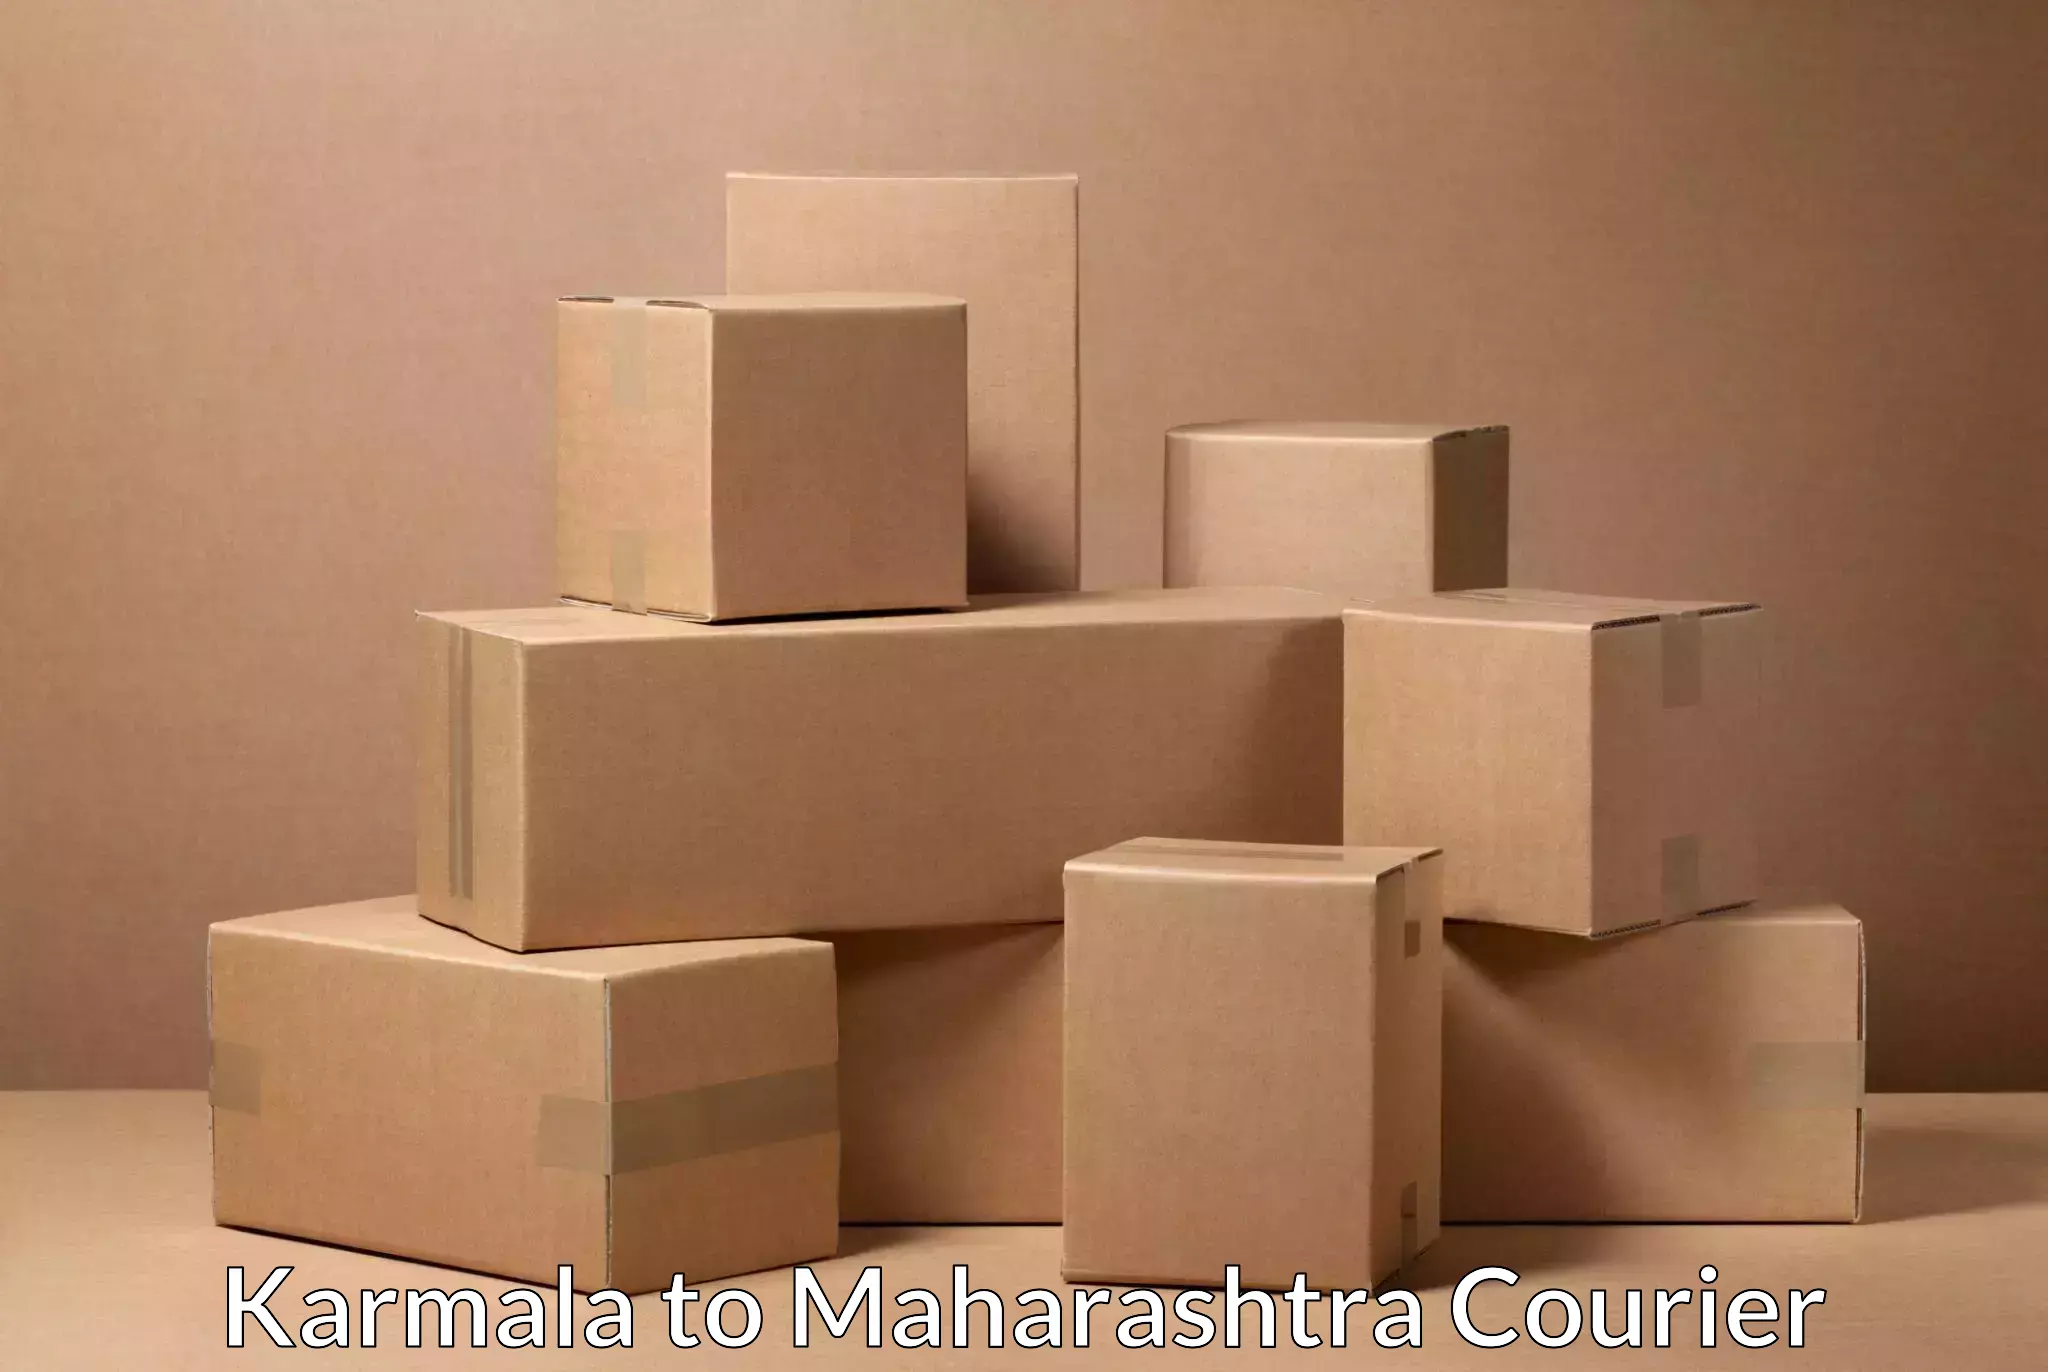 Courier service partnerships Karmala to Mumbai